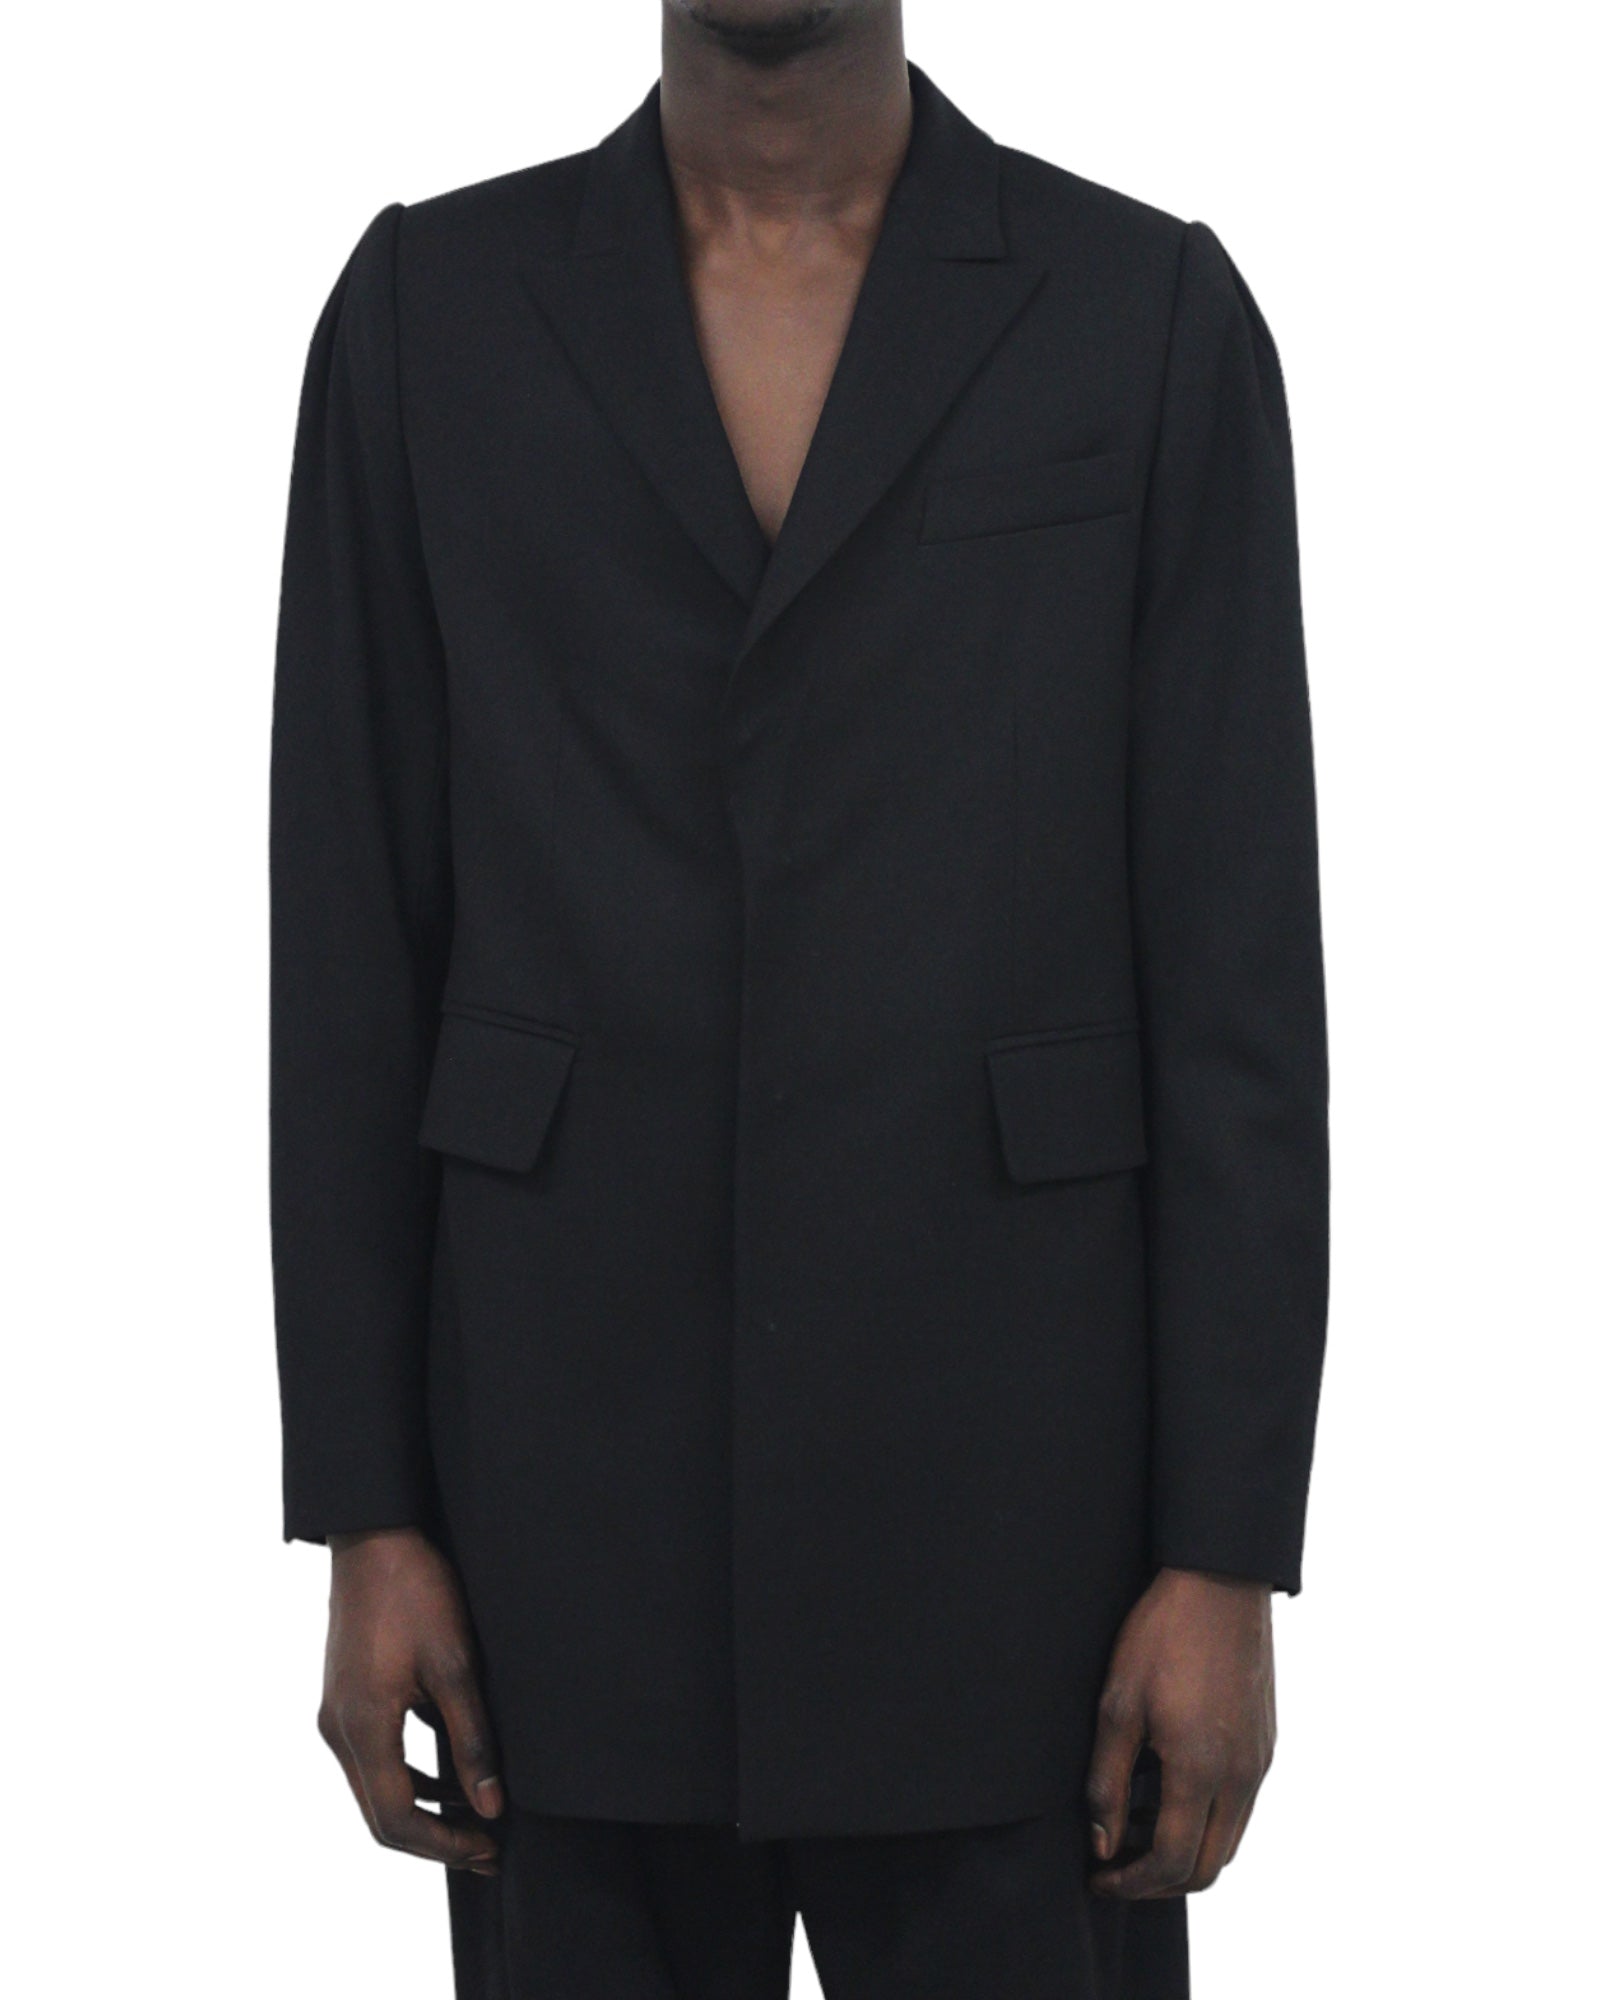 Black Cone Suit Jacket AW22 – BIANCA SAUNDERS